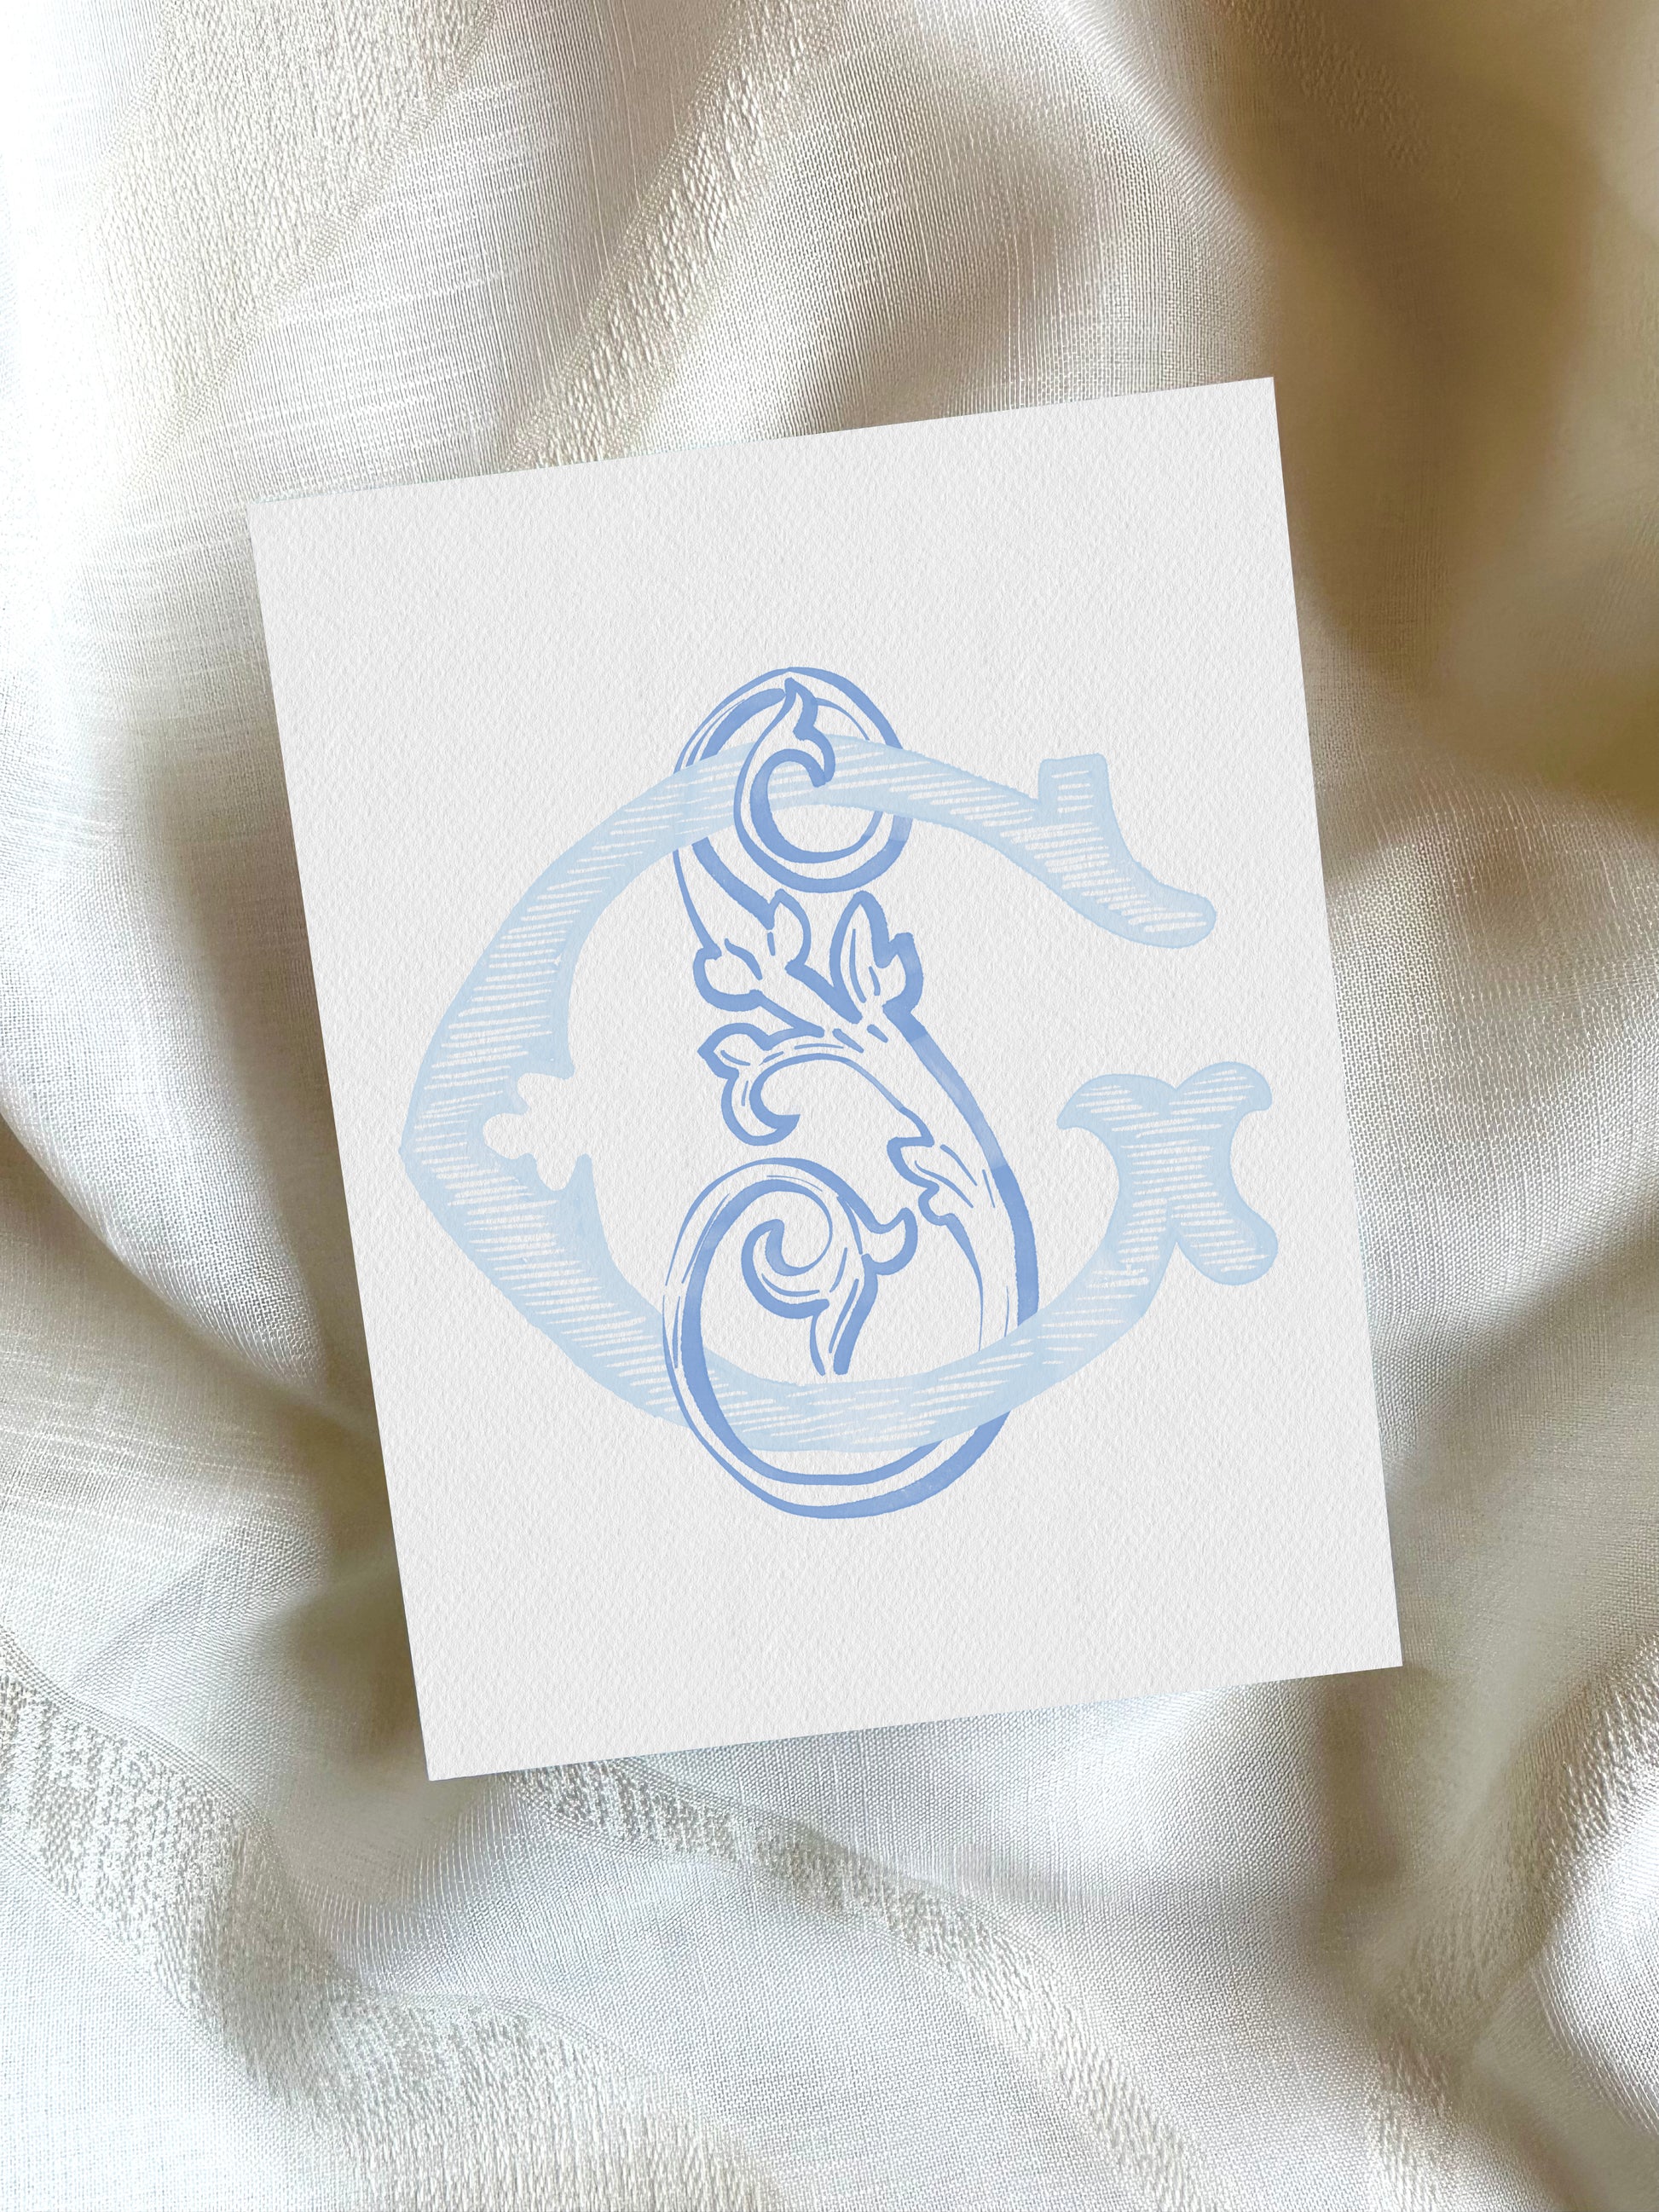 2 Letter Monogram with Letters GS SG | Digital Download - Wedding Monogram SVG, Personal Logo, Wedding Logo for Wedding Invitations The Wedding Crest Lab